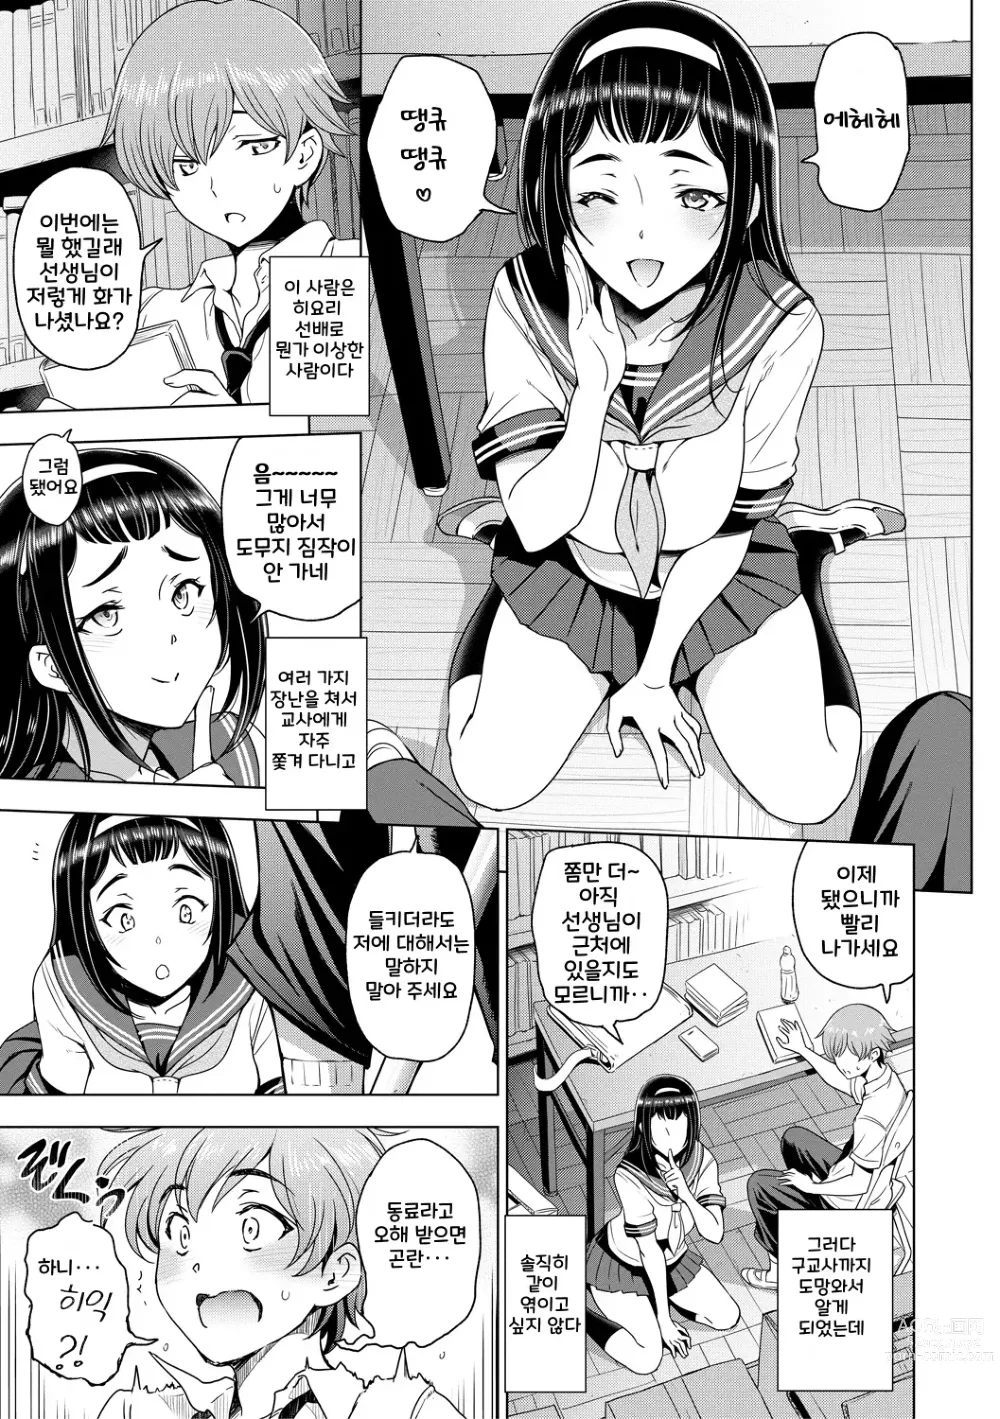 Page 9 of manga Nee Ecchi shichao kka - Hey, lets have sex.